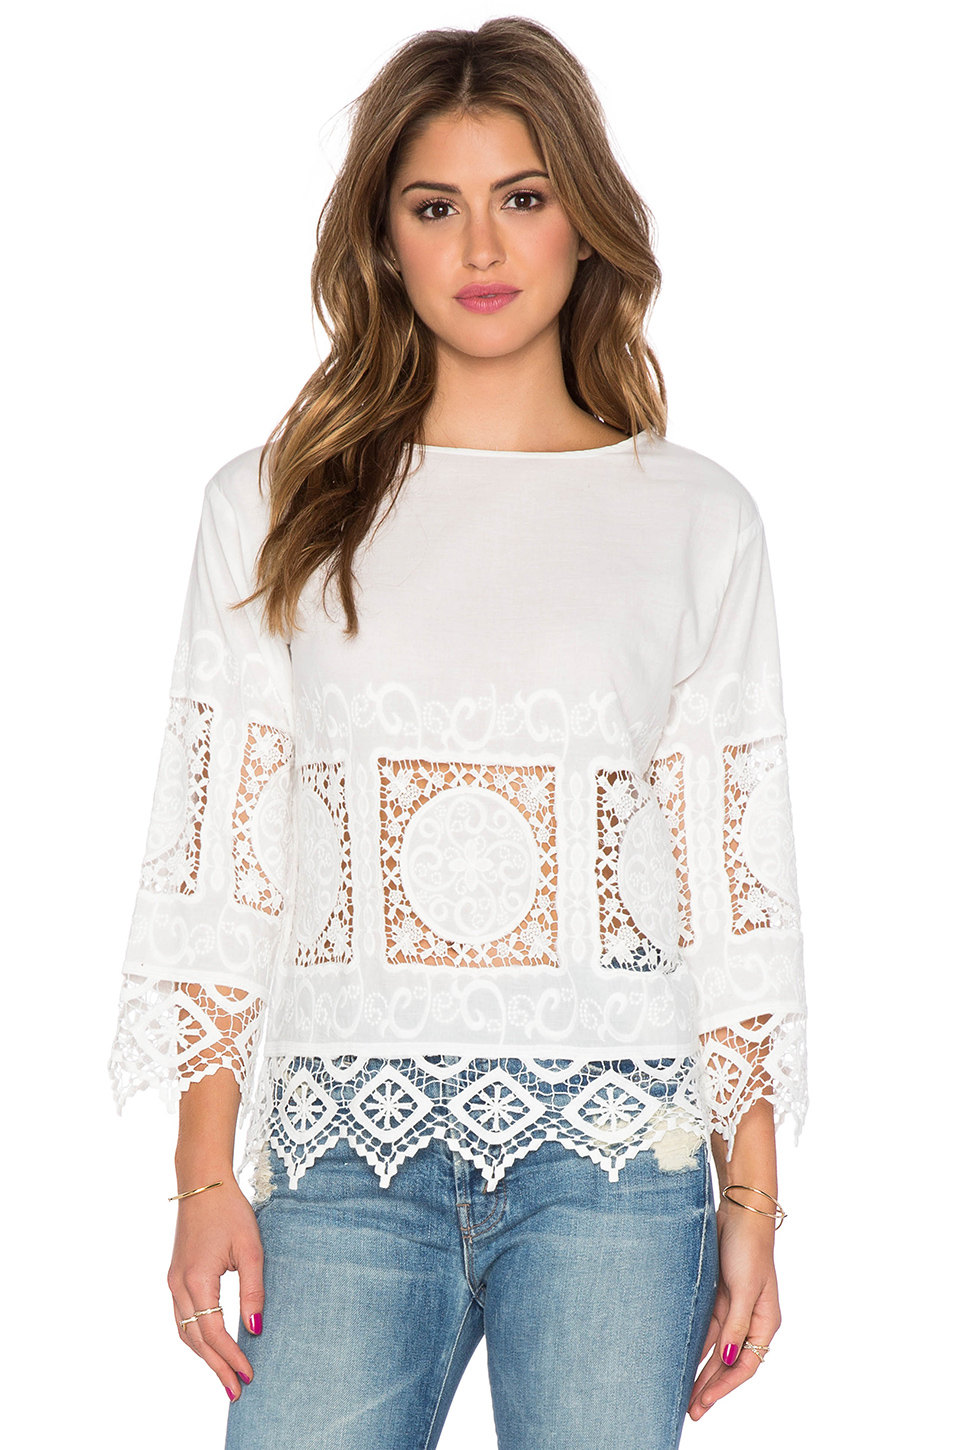 Lyst - Endless Rose Crochet Long Sleeve Top in White